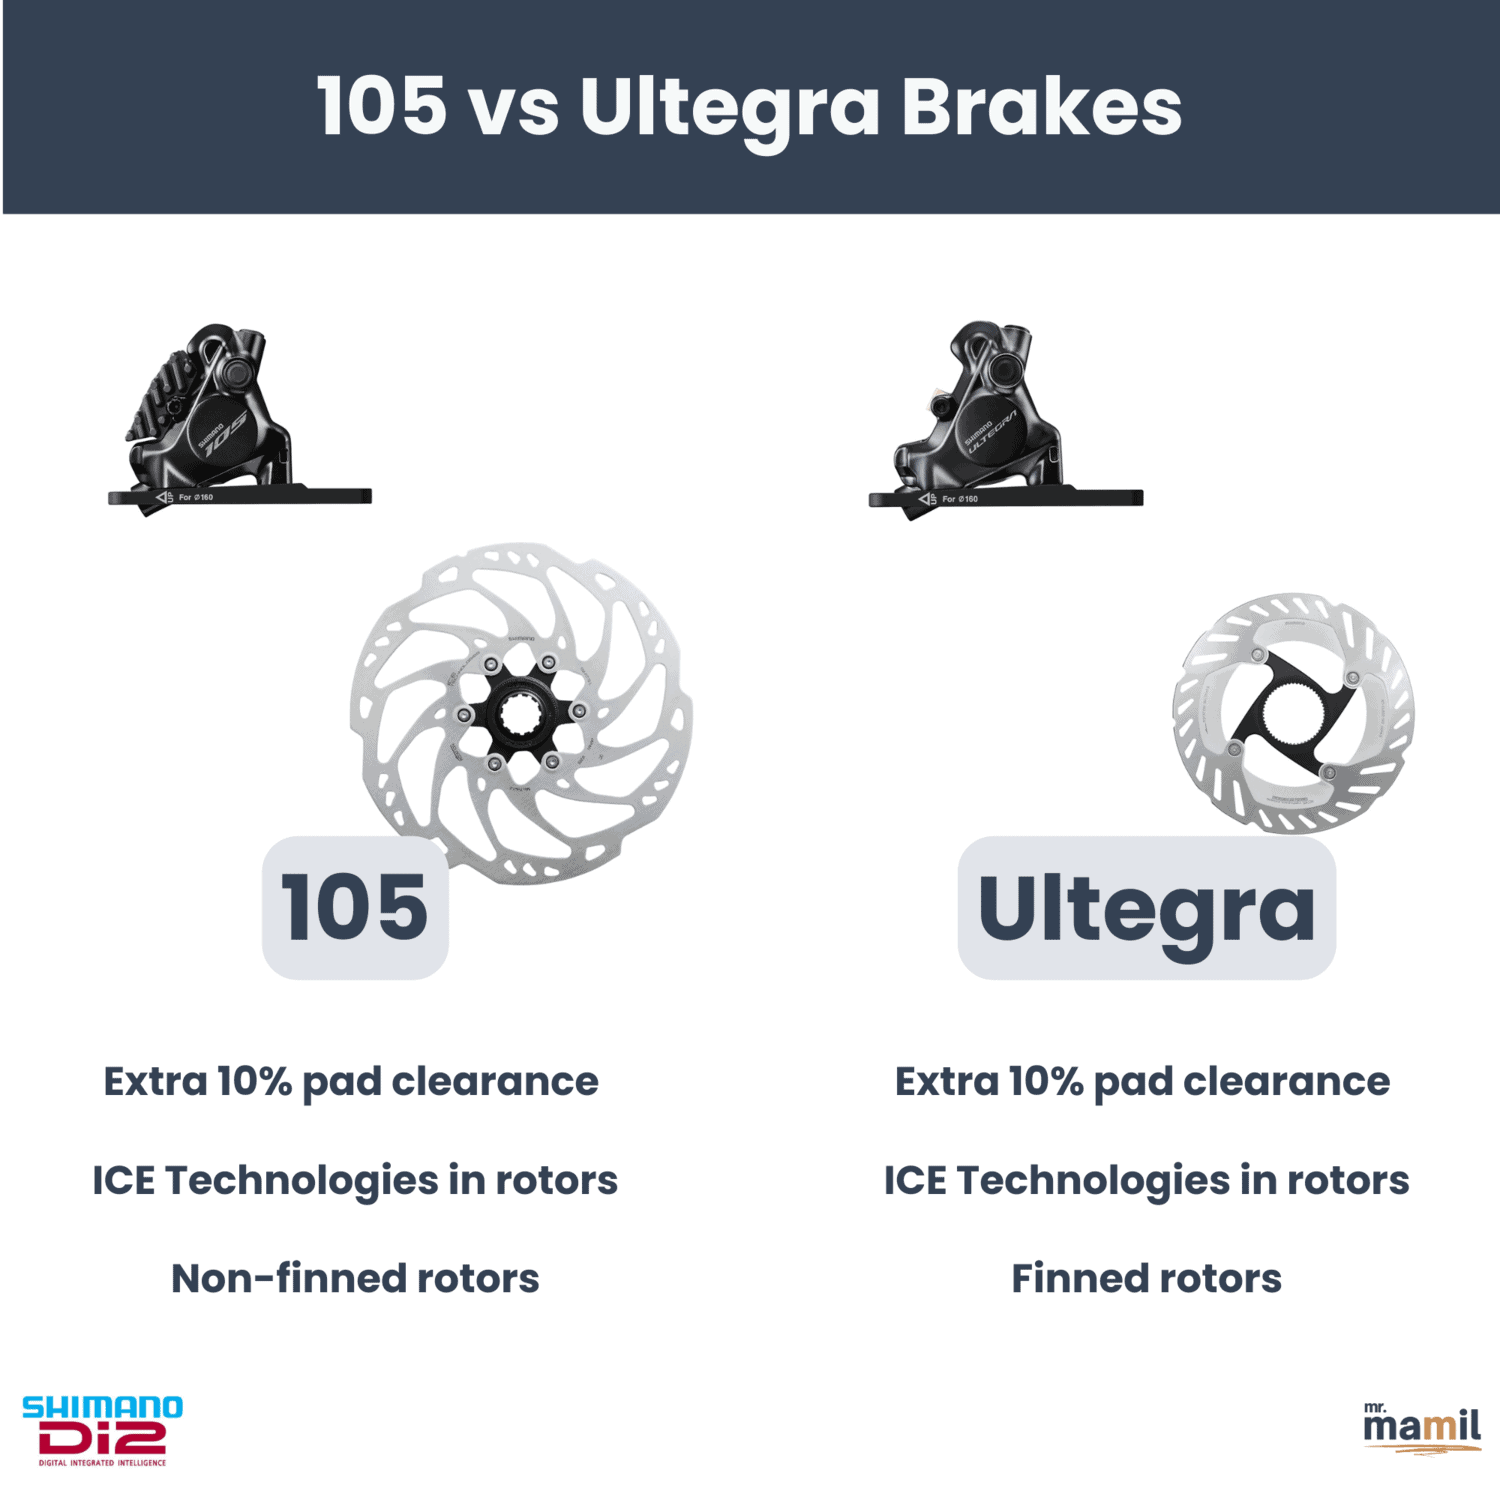 Shimano 105 and Ultegra Brakes